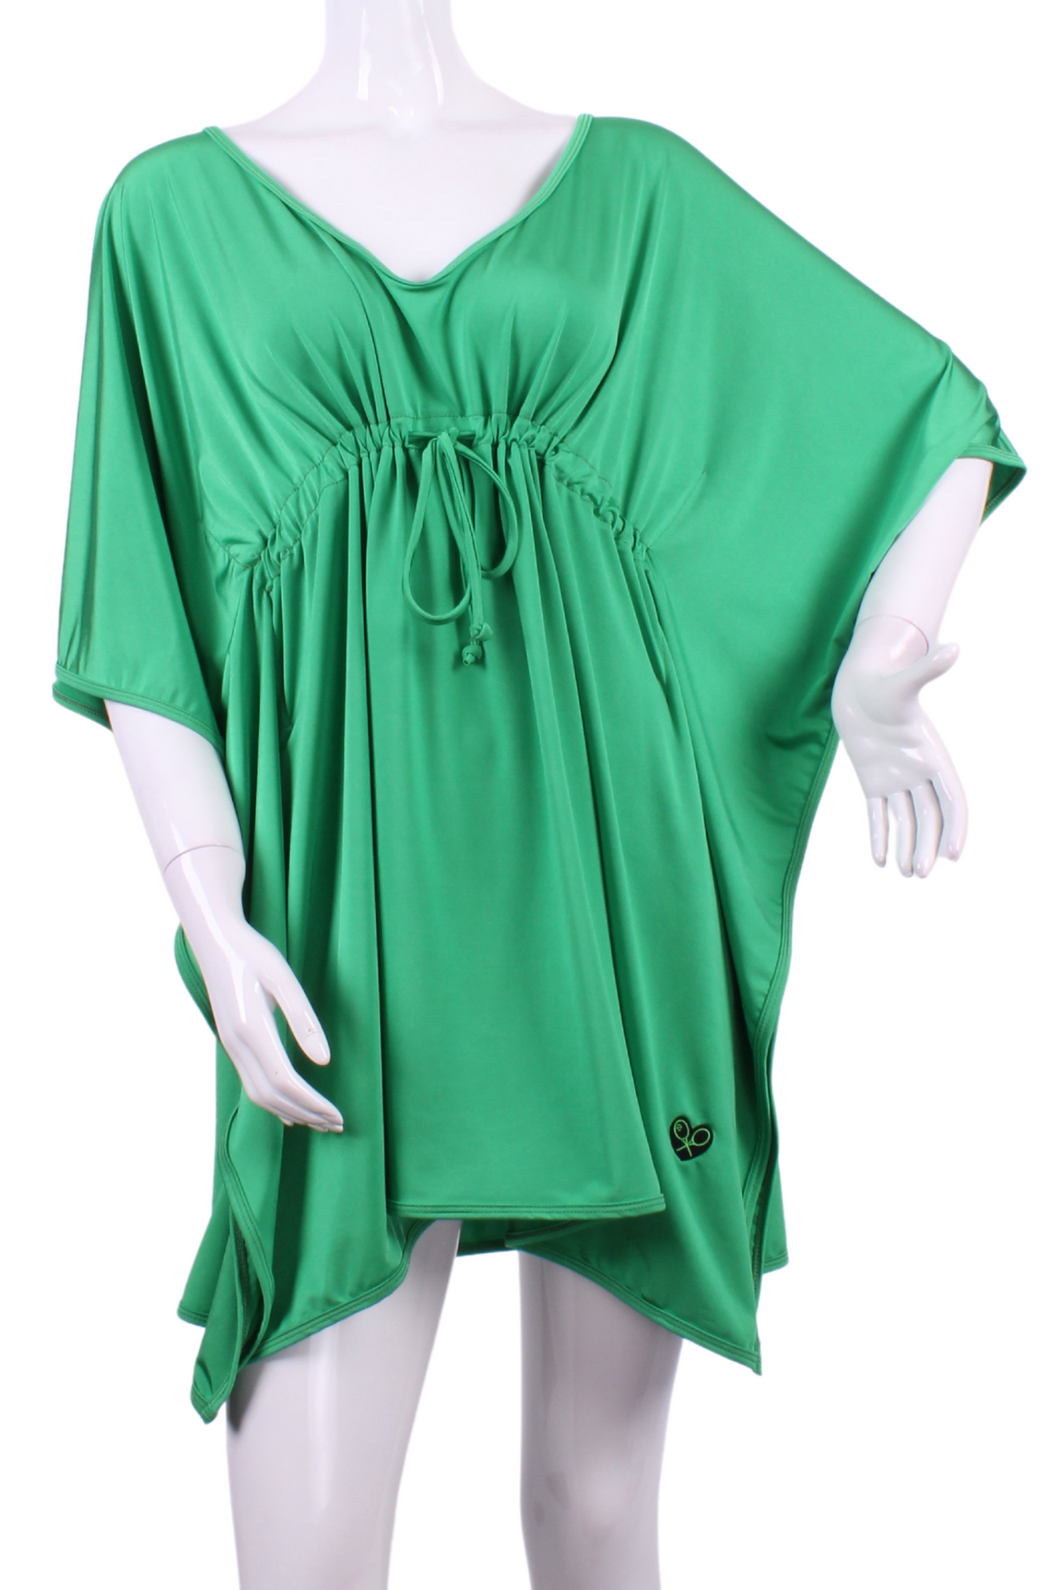 Green Cleo Sneakers to Flip Flops Tennis Dress - I LOVE MY DOUBLES PARTNER!!!